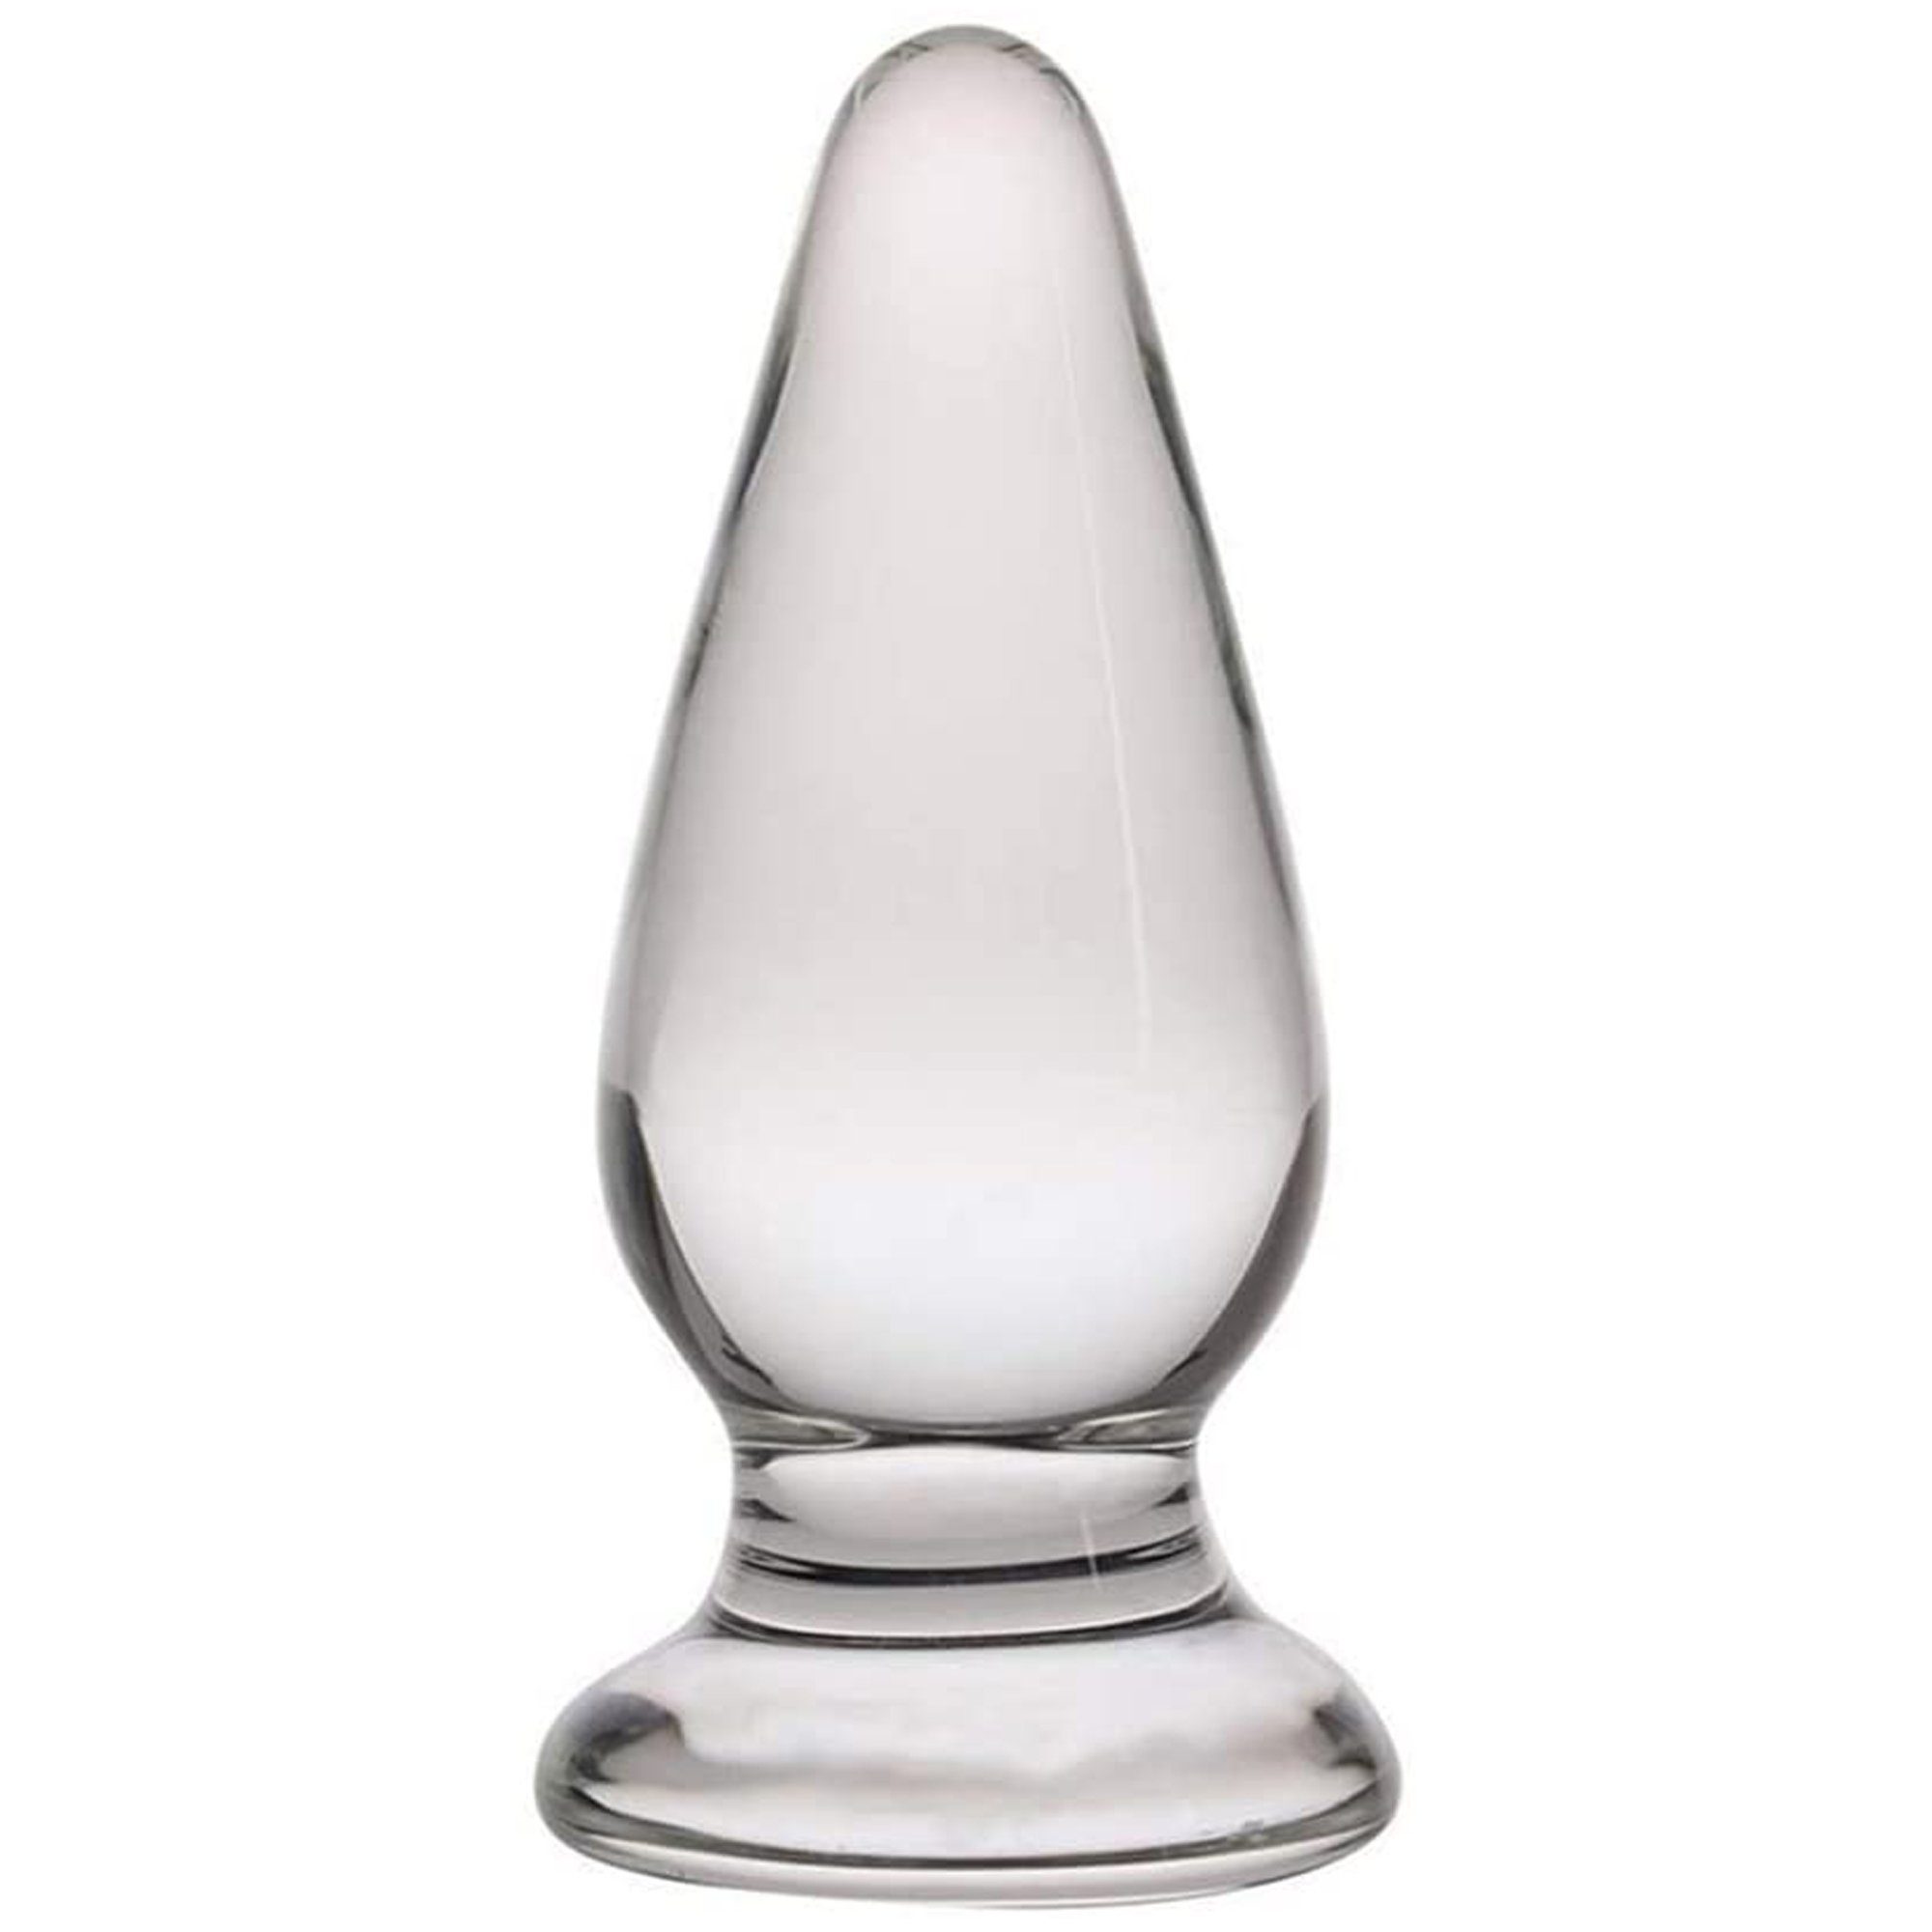 Analplug Analplug Butt Glas Sandritas Plug aus ø Durchsichtig 4,5 Qualitätsglas cm